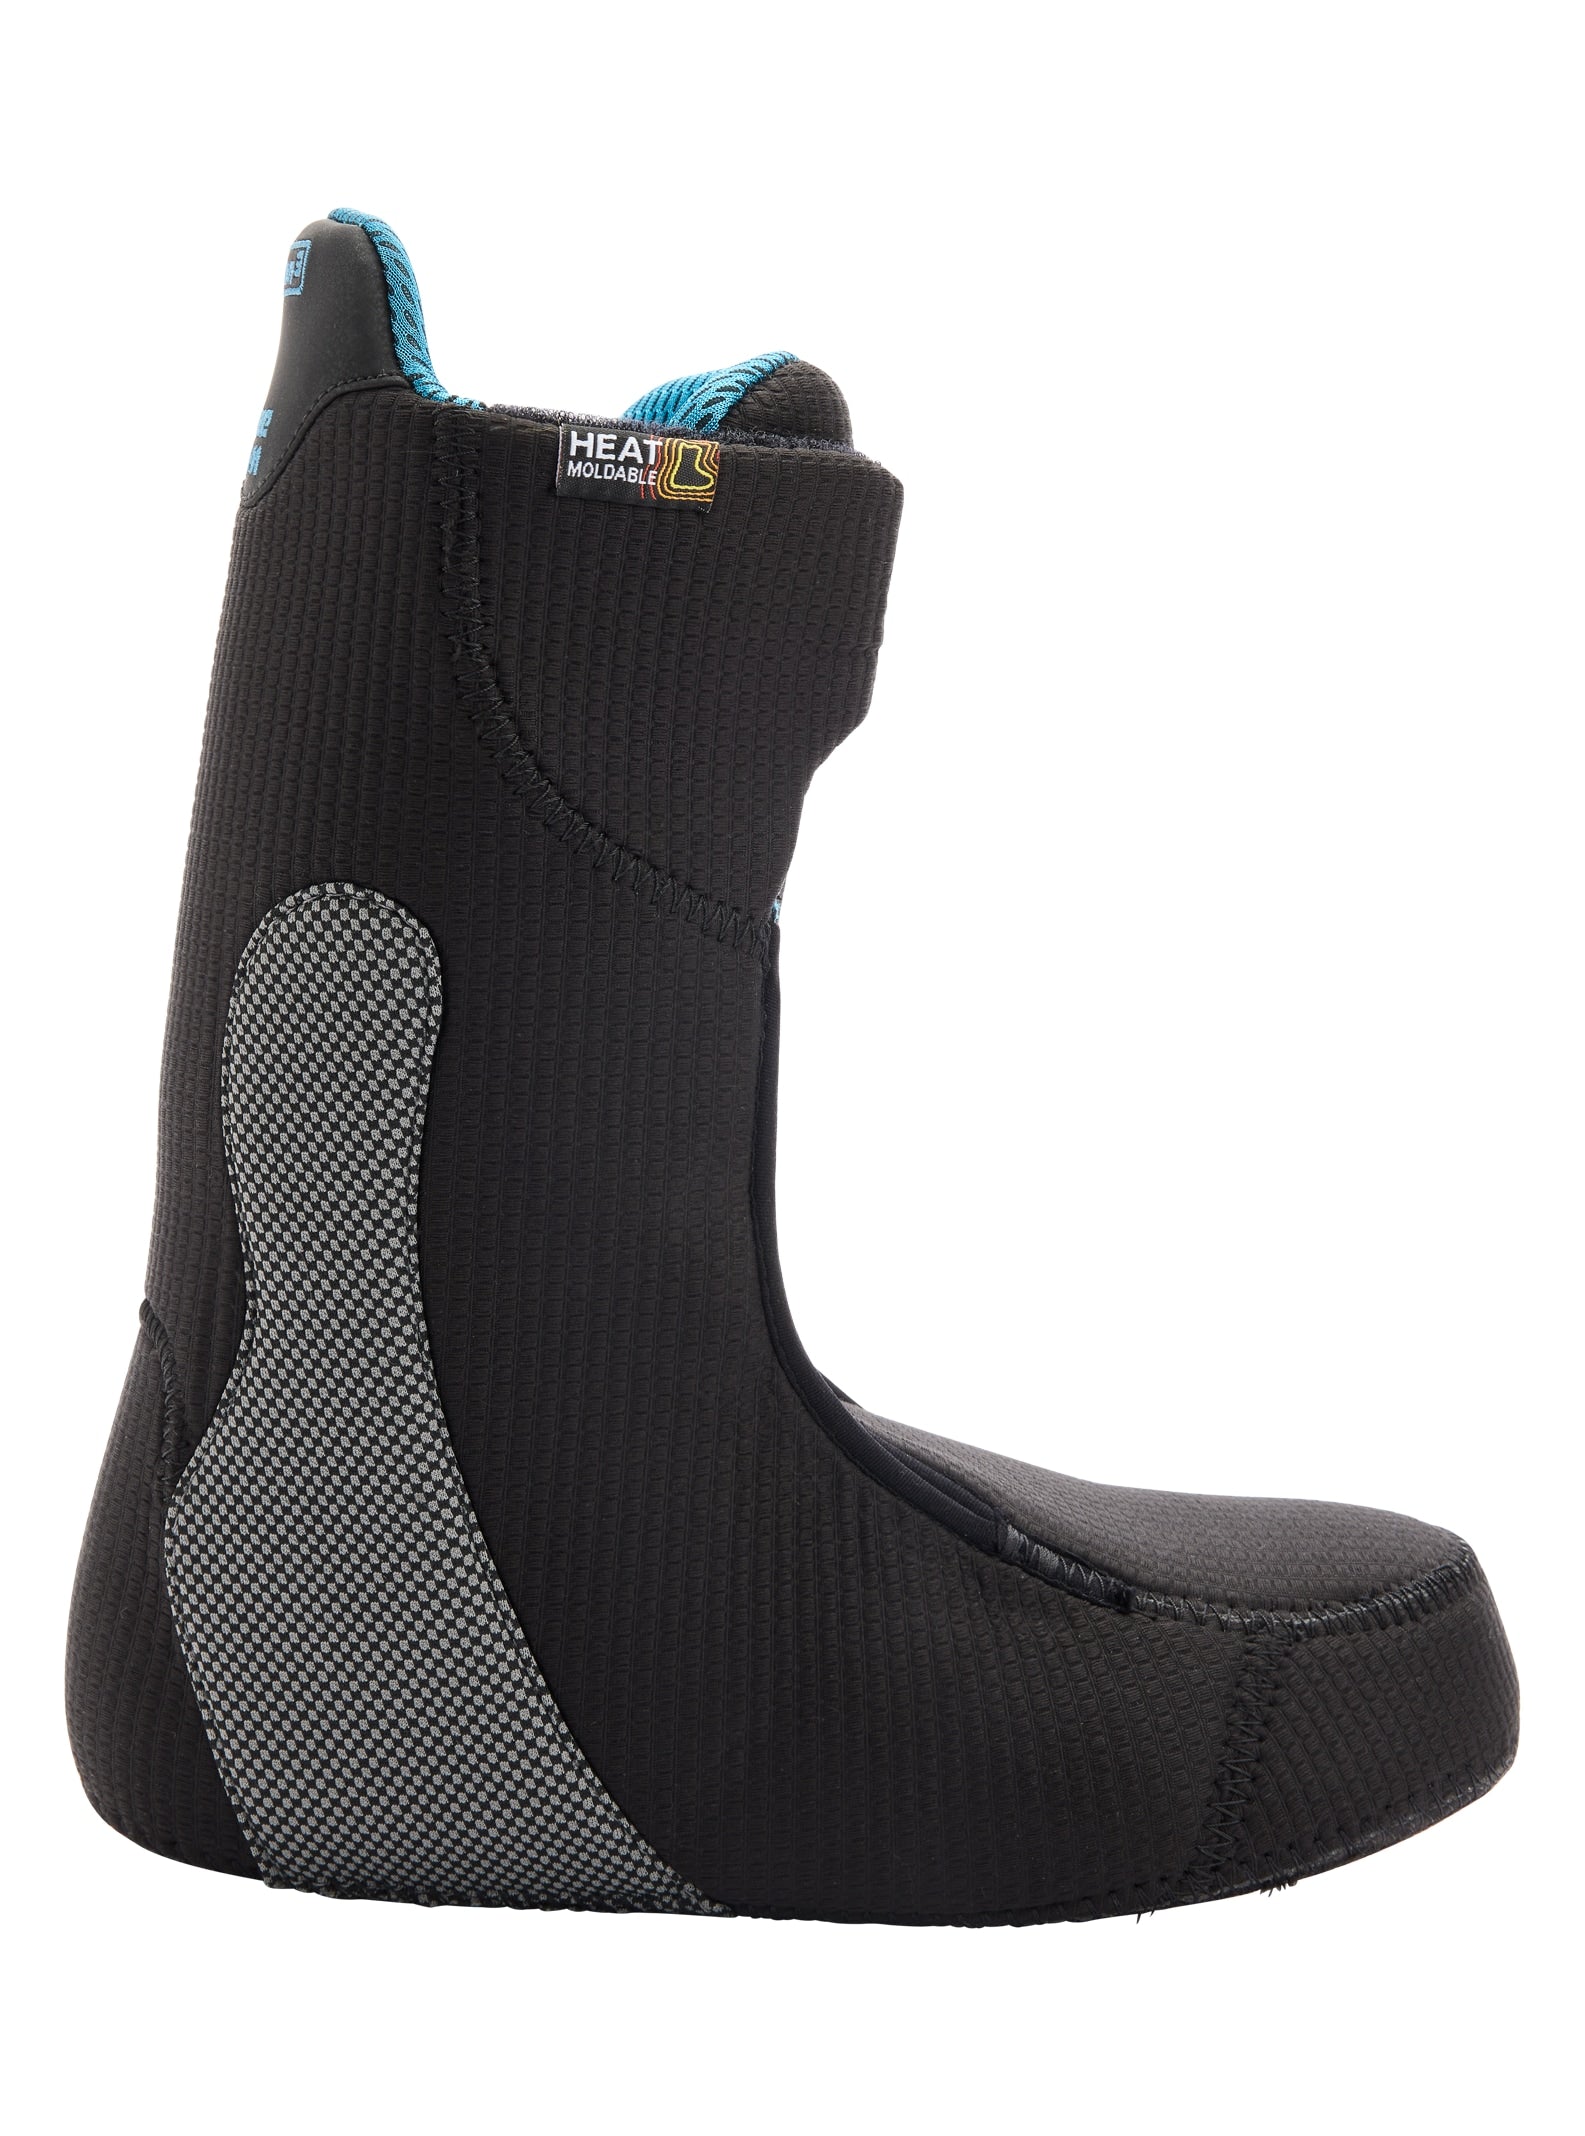 product image Men's Photon BOA® Snowboard Boots - Wide, Black